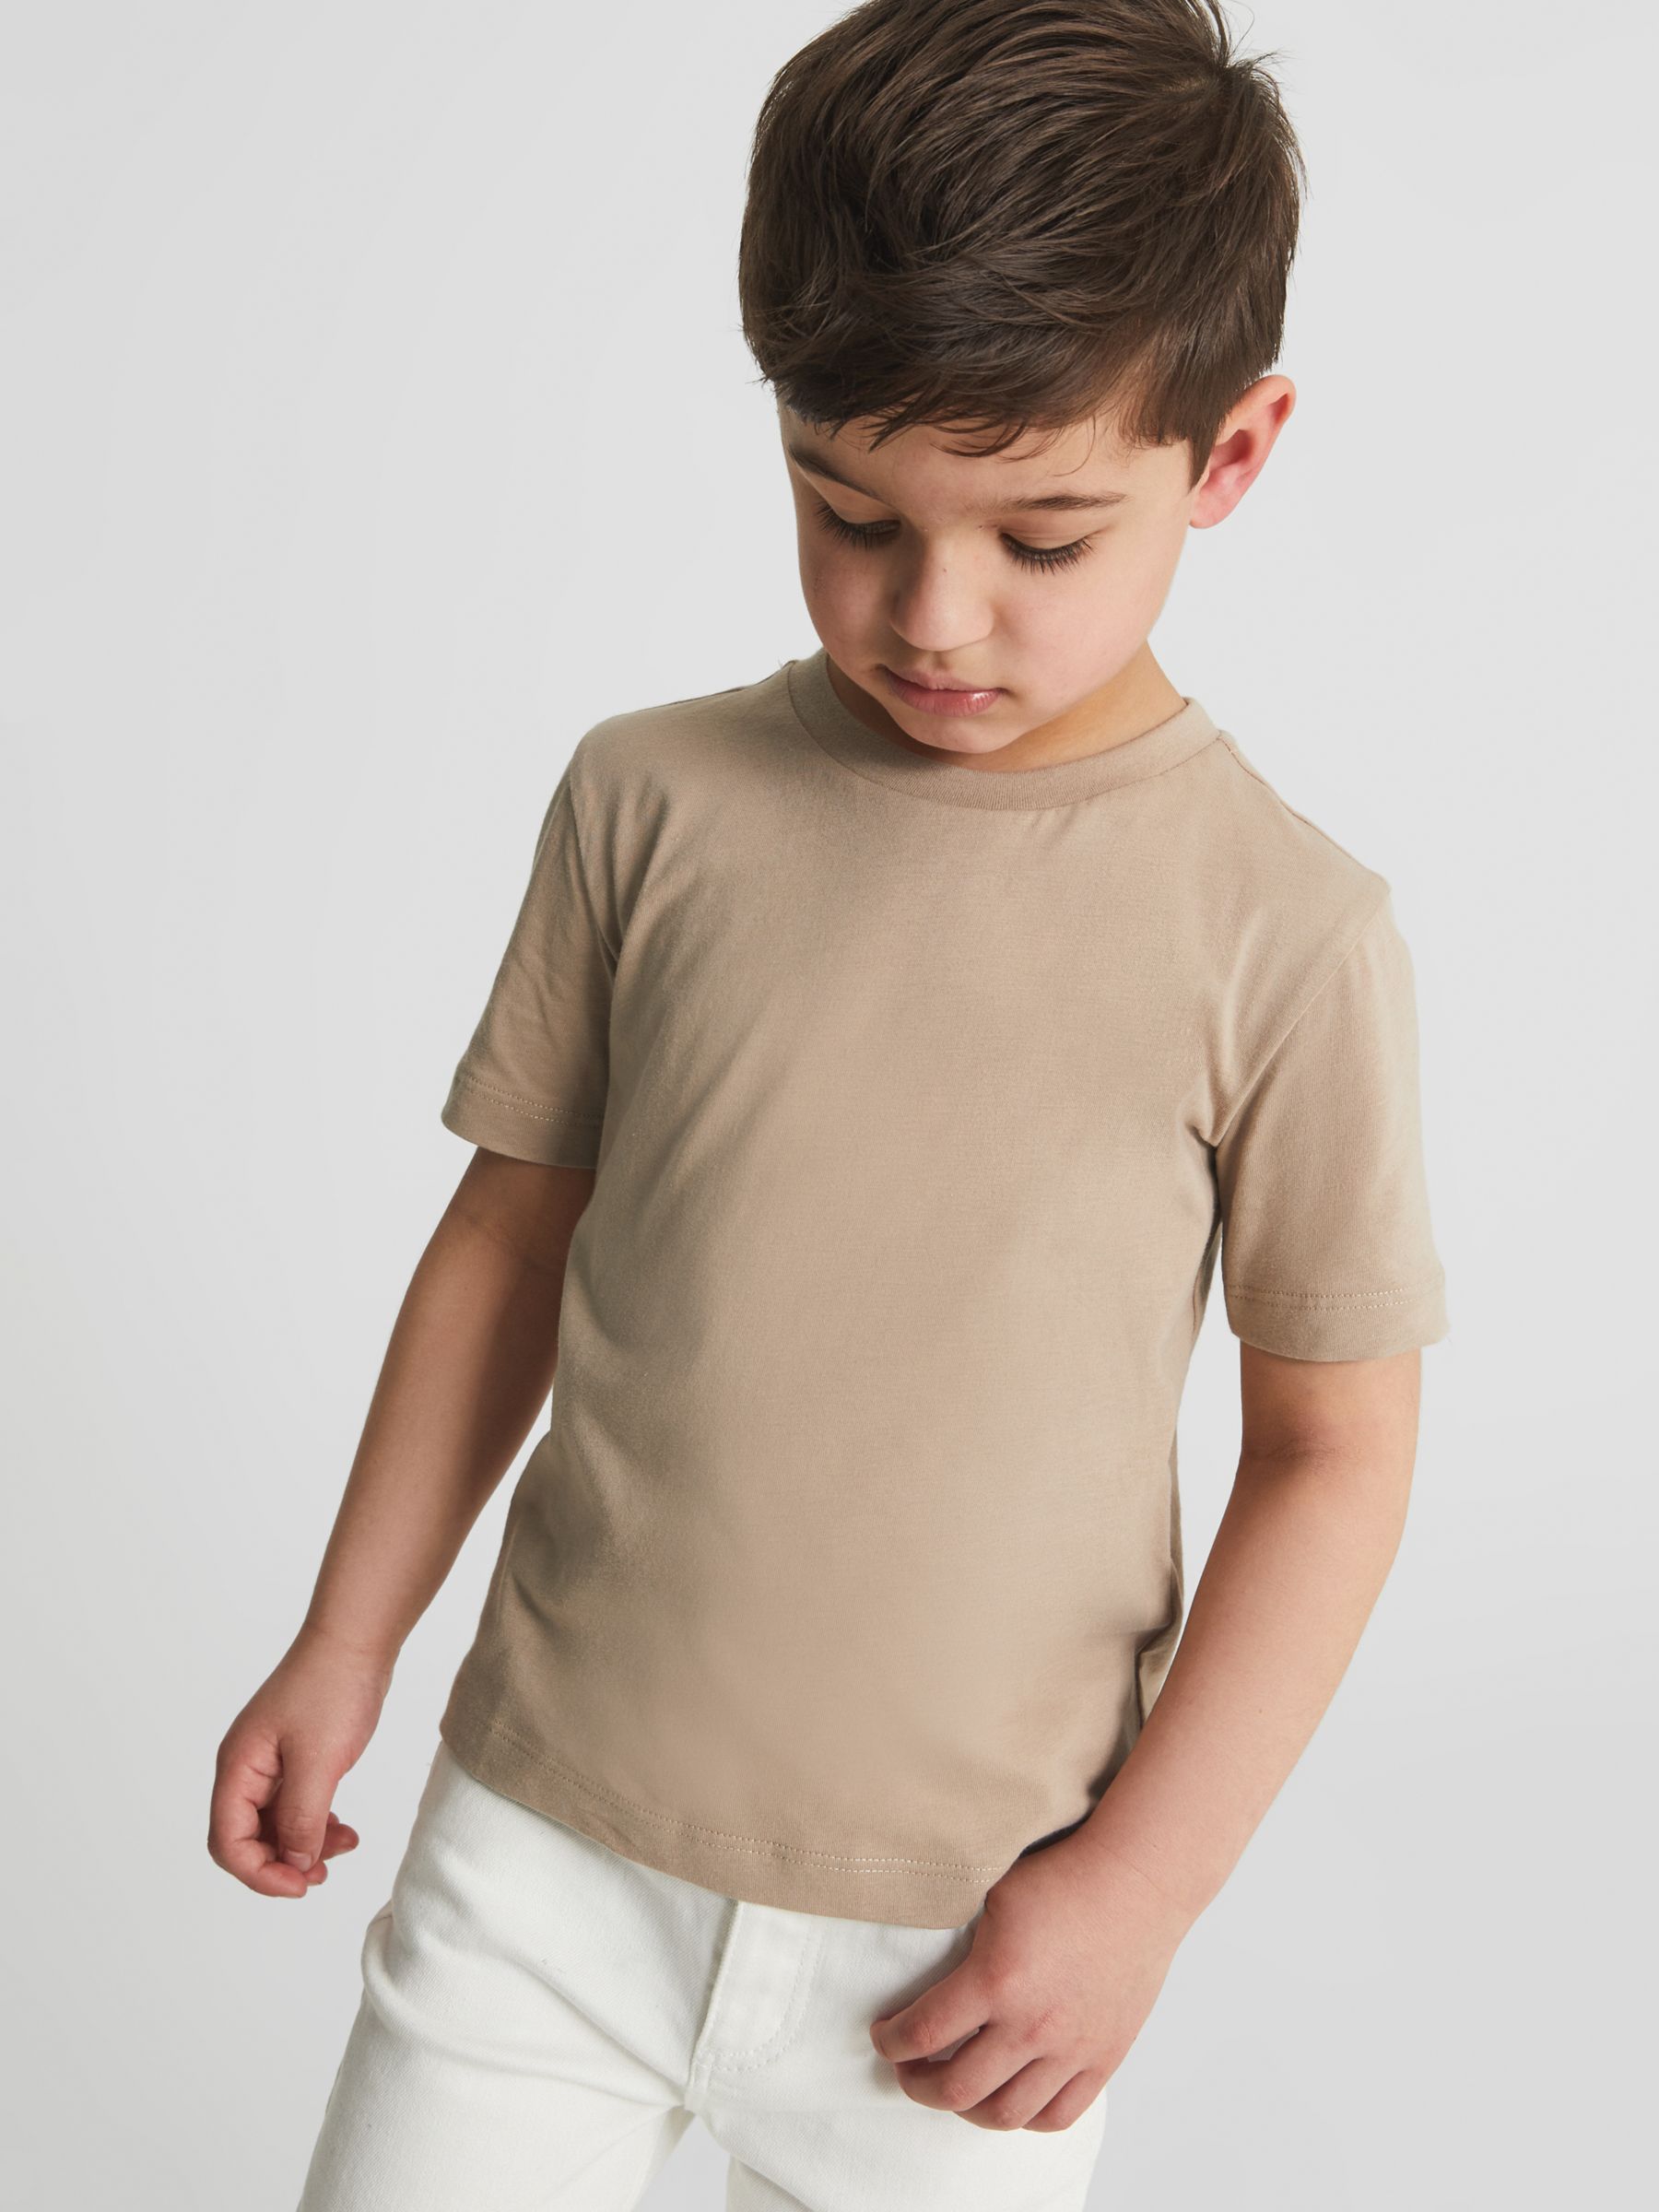 Детская футболка Bless с круглым вырезом Reiss, камень